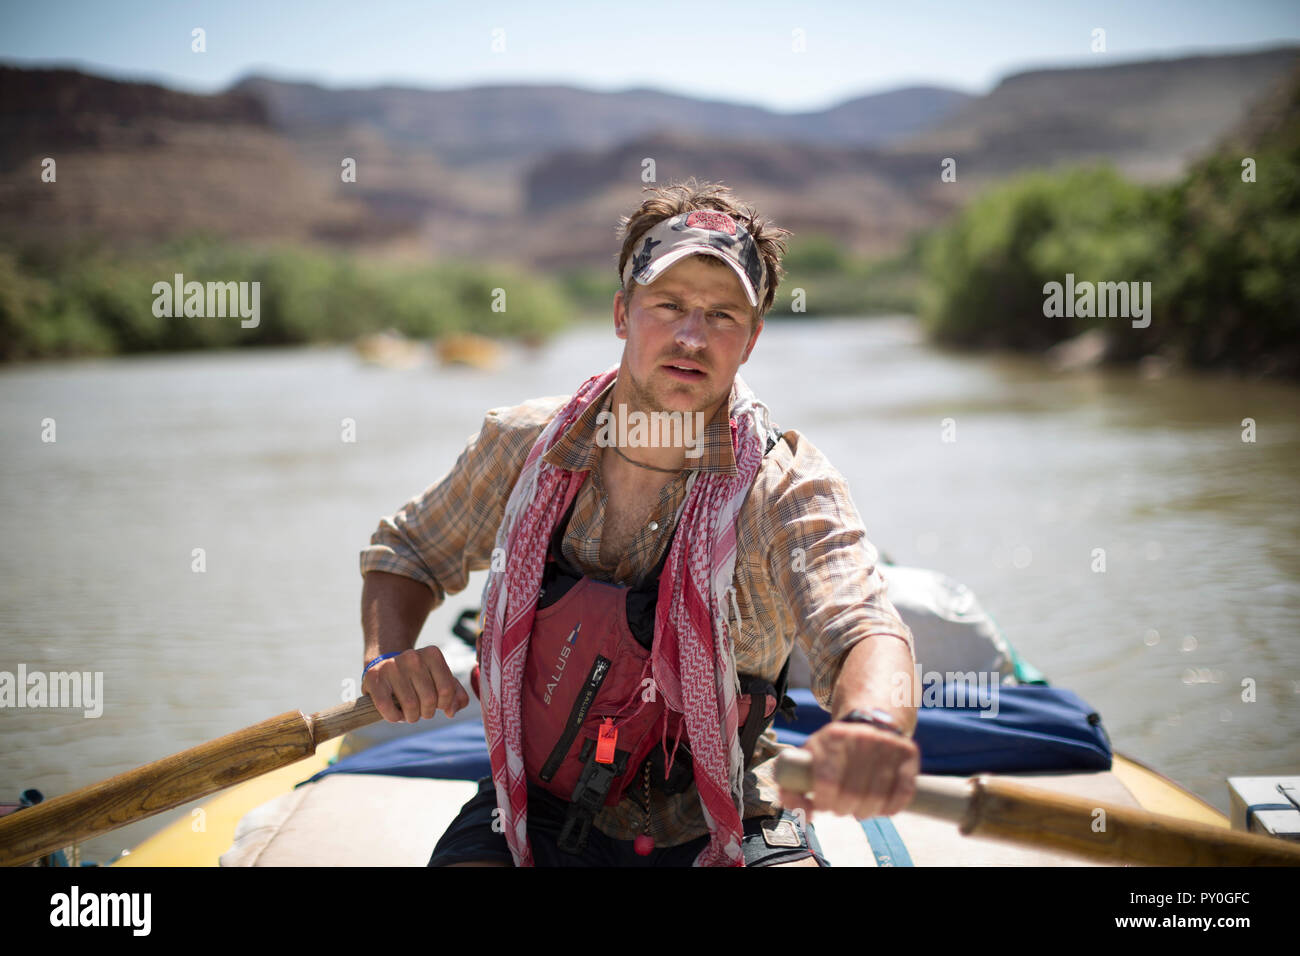 Raft guide man rowing and looking at camera during rafting trip, Desolation/Gray Canyon section, Utah, USA Stock Photo